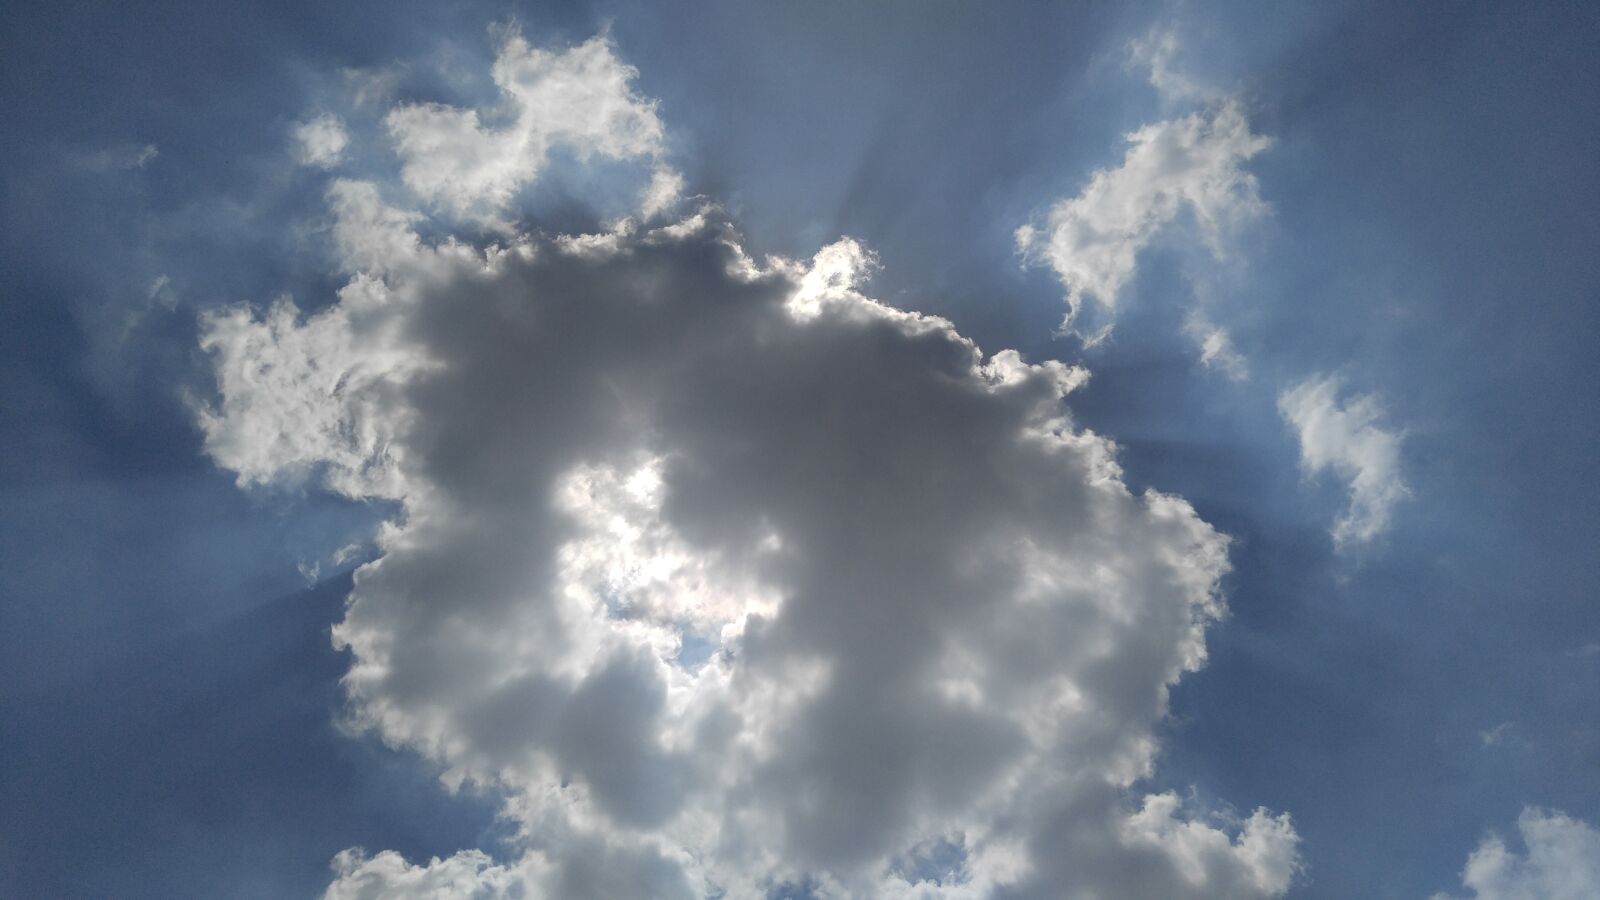 LG V10 sample photo. Big cloud, clouds, sky photography